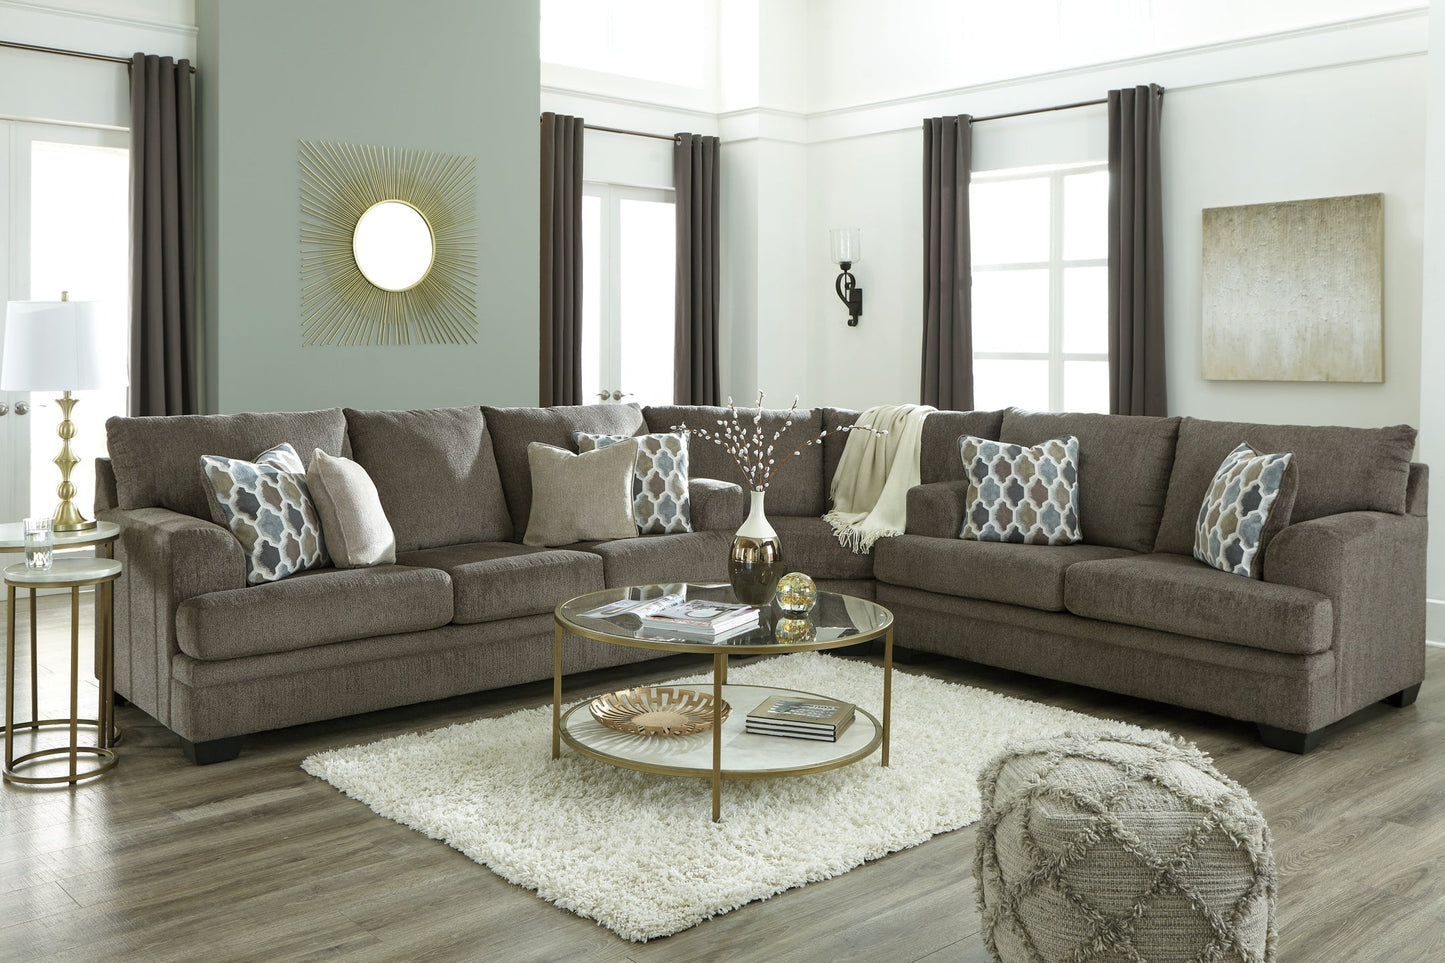 Dorsten Queen Sofa Sleeper at Towne & Country Furniture (AL) furniture, home furniture, home decor, sofa, bedding